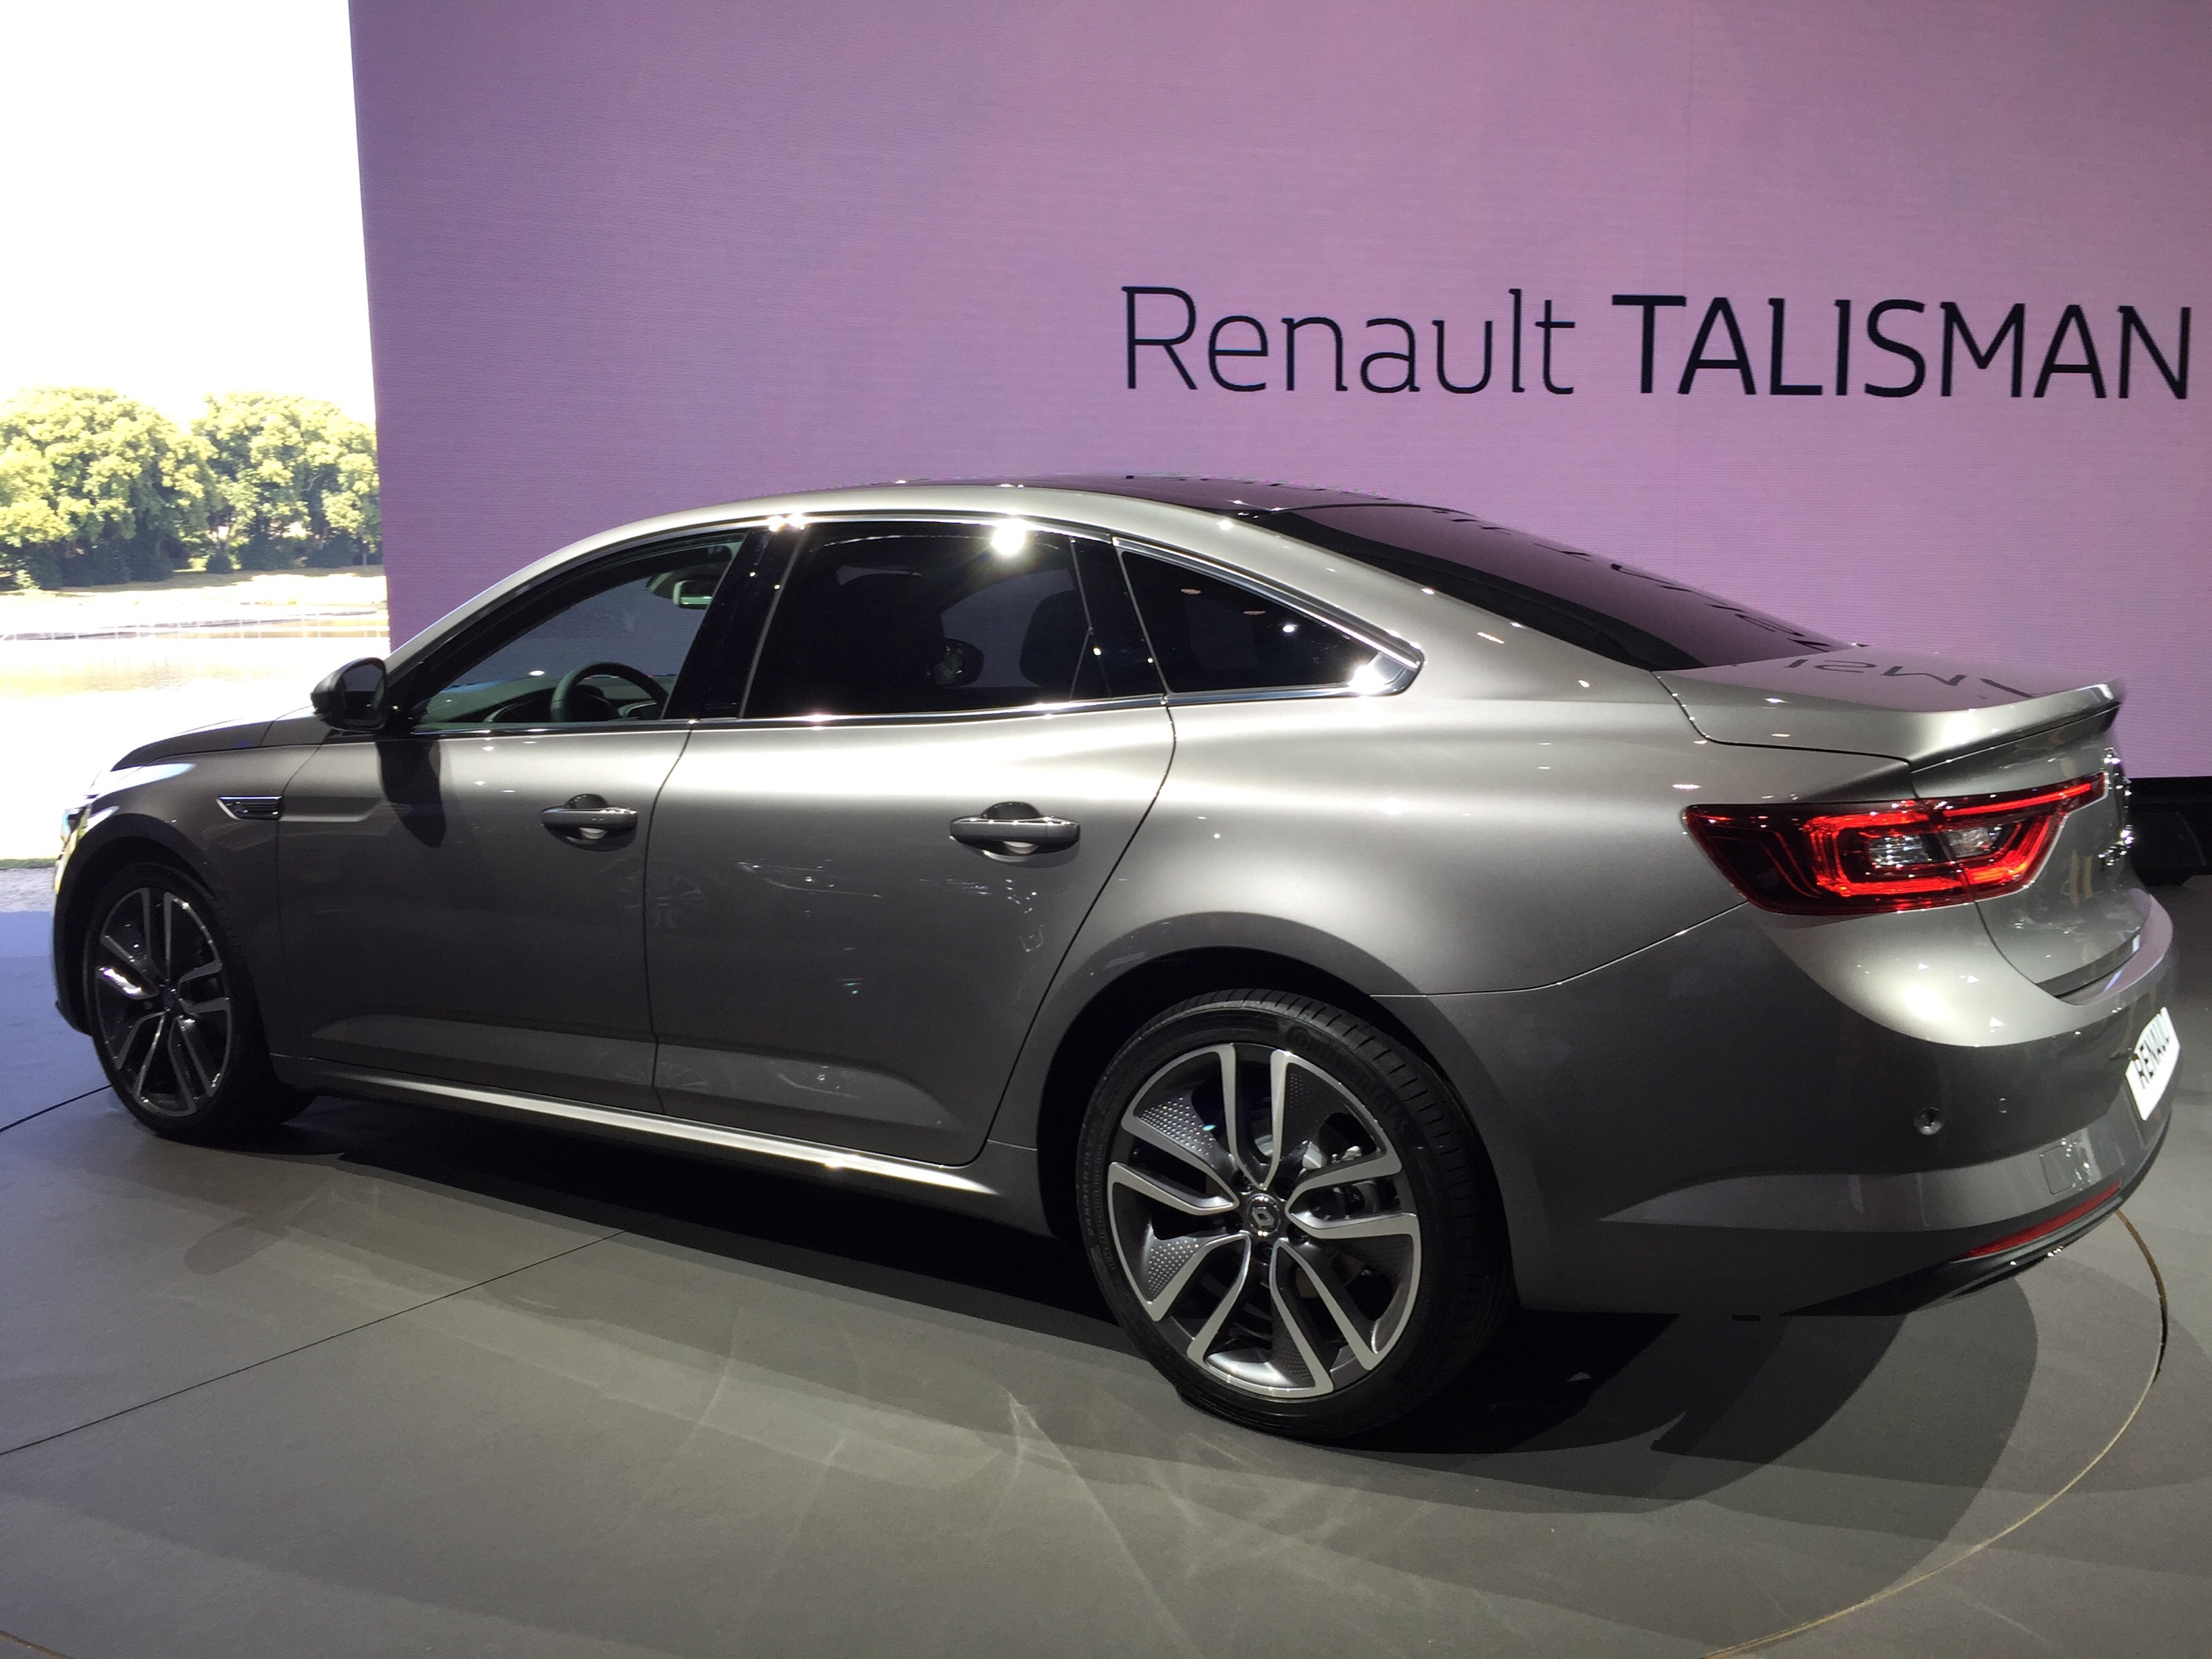 Renault Talisman best specifications